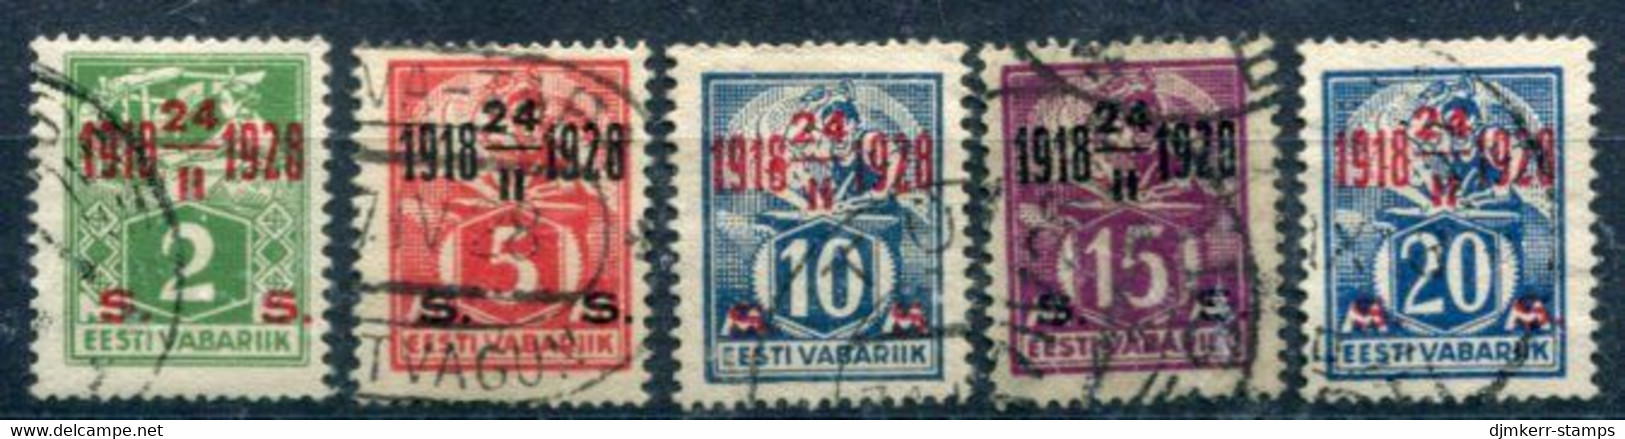 ESTONIA 1928 10th Anniversary Of Independence Used.  Michel 68-72 - Estland